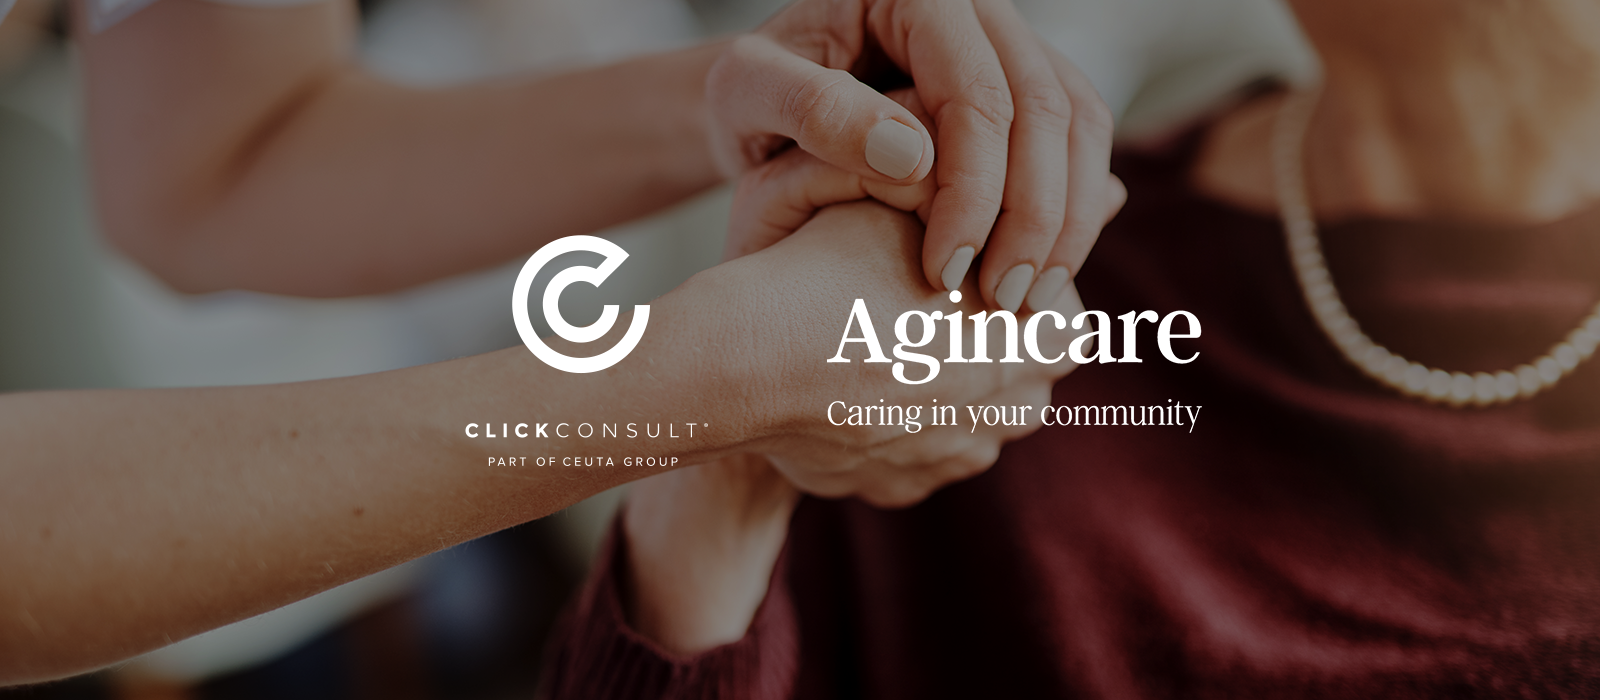 Click Consult & Agincare Client Win